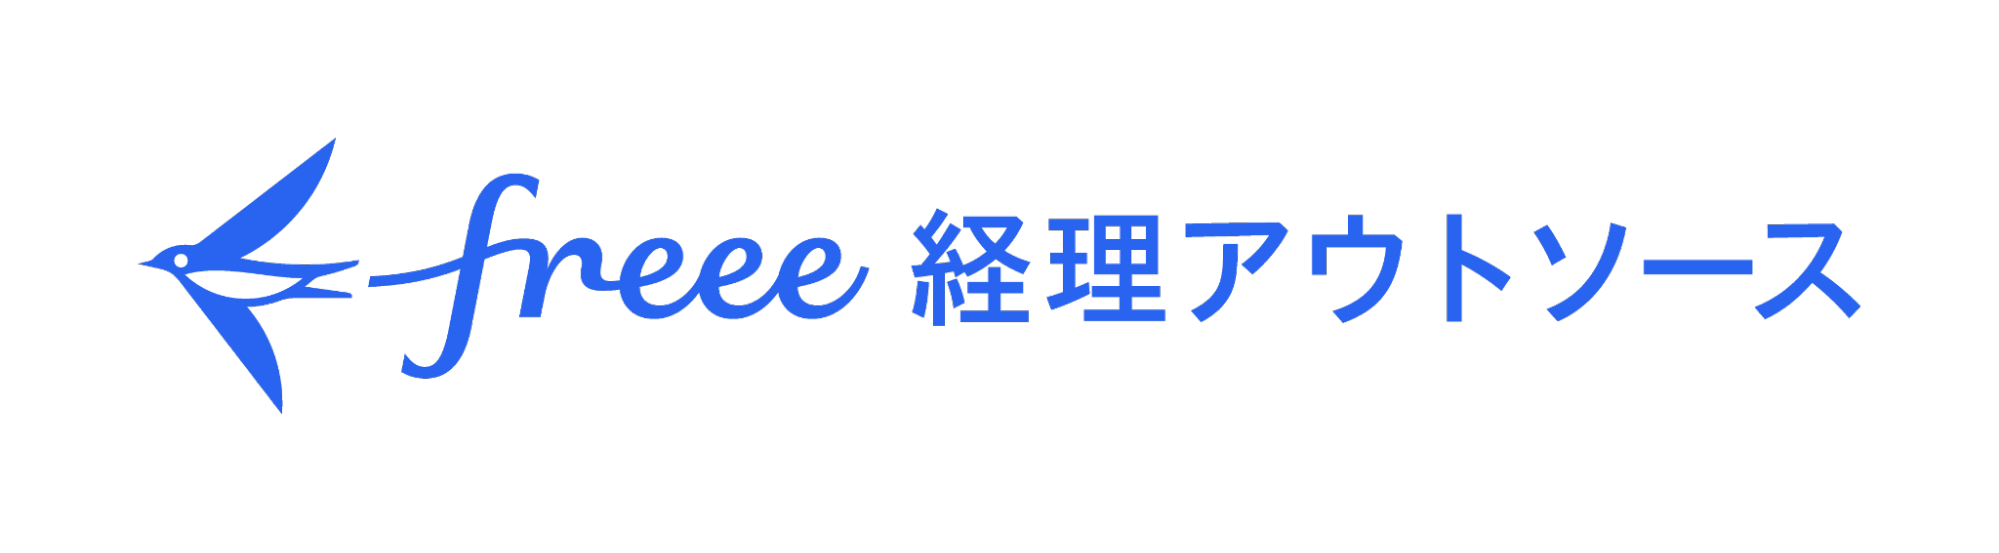 freee経理アウトソーシングロゴ